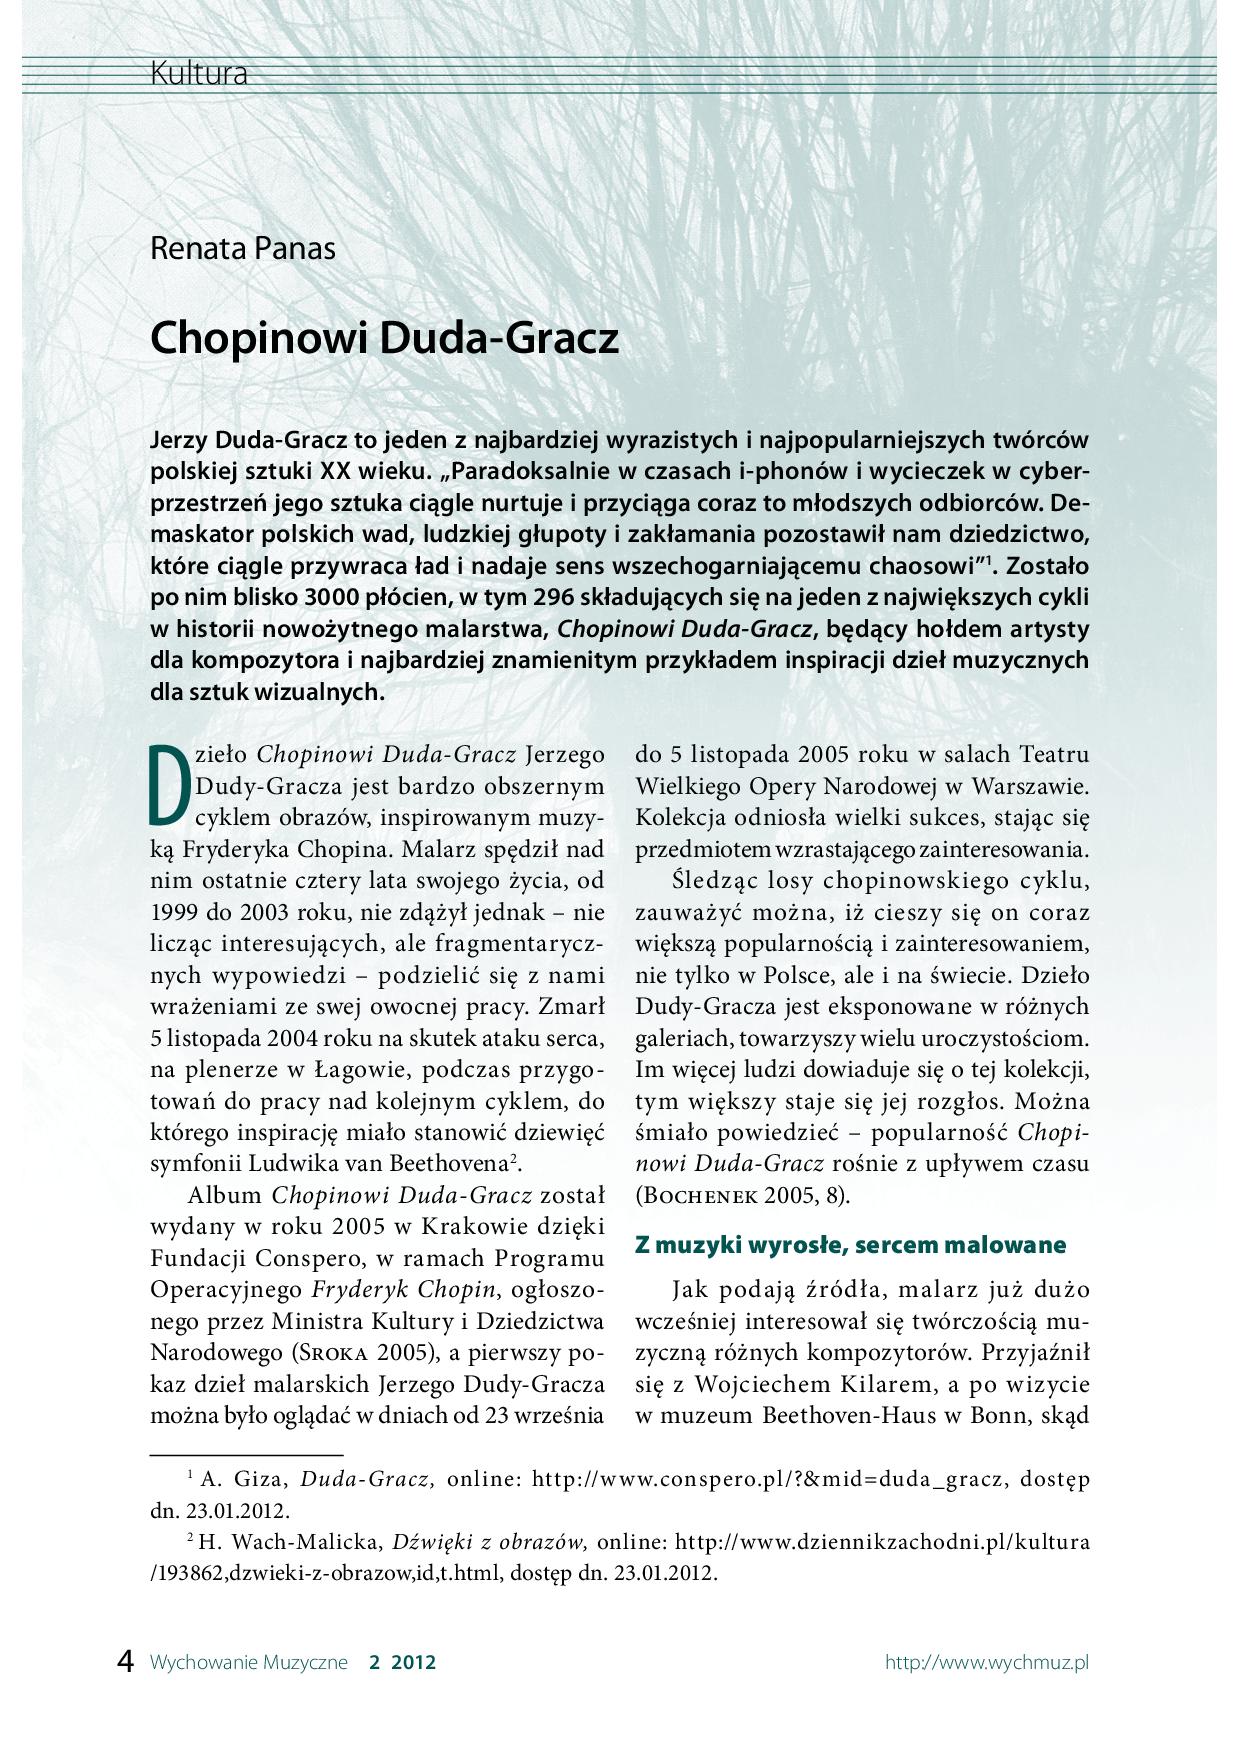 Chopinowi Duda-Gracz